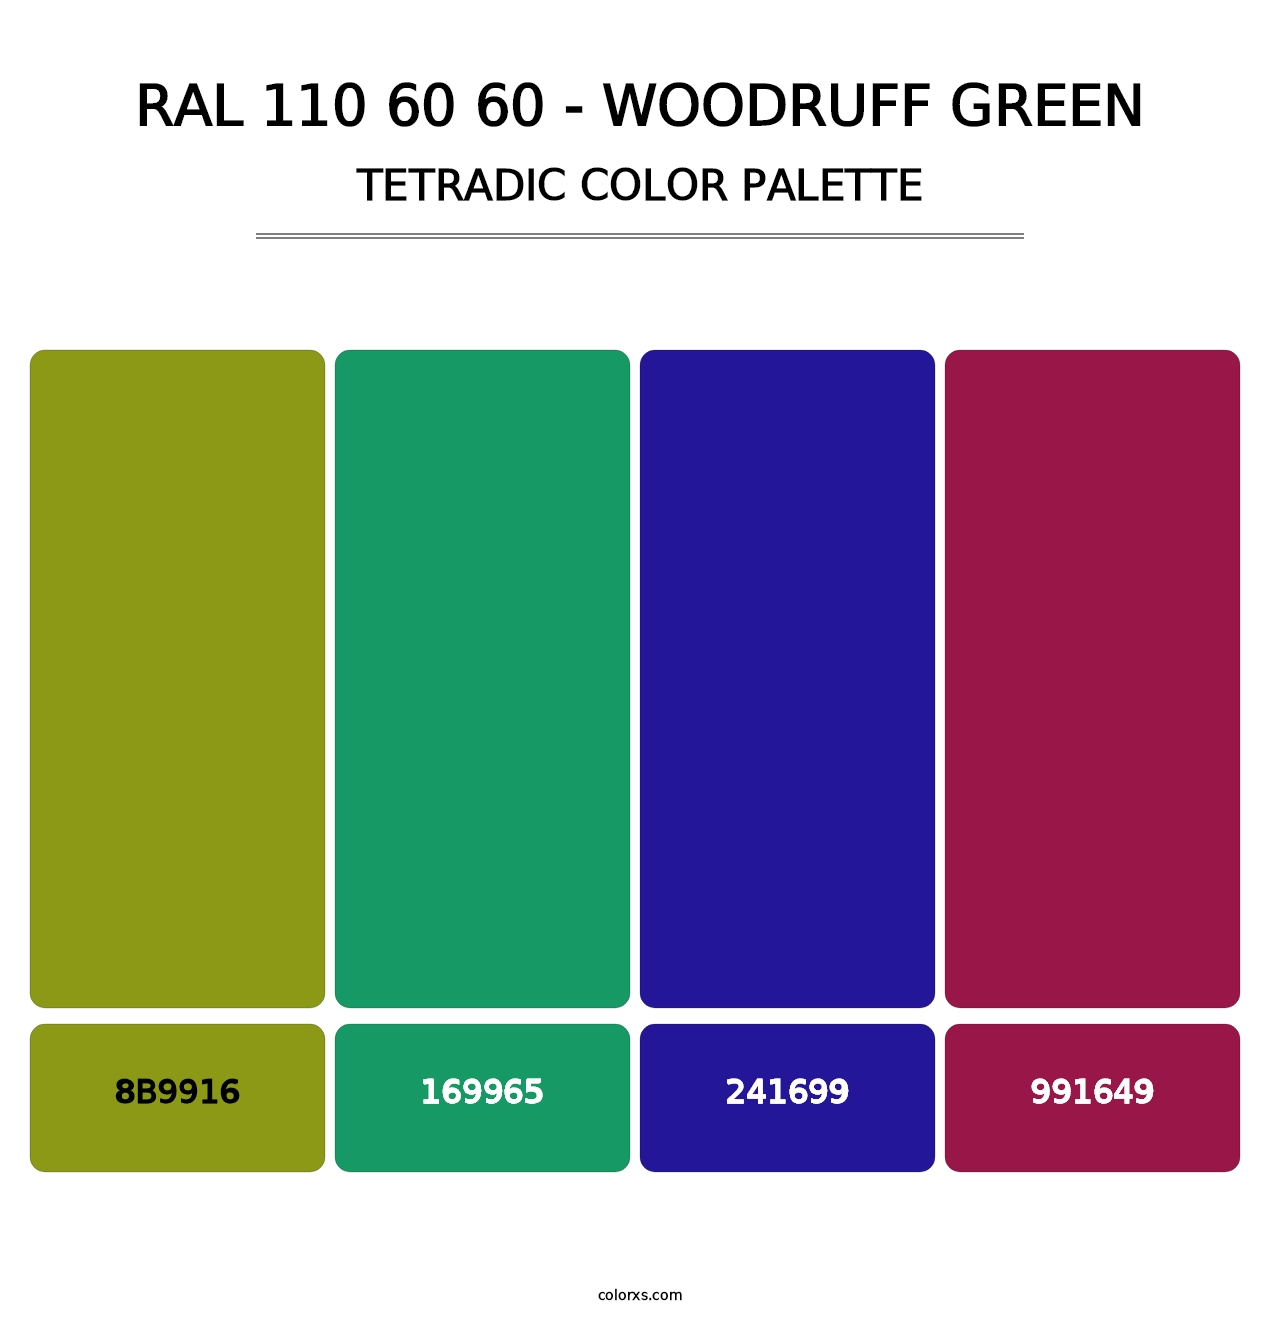 RAL 110 60 60 - Woodruff Green - Tetradic Color Palette